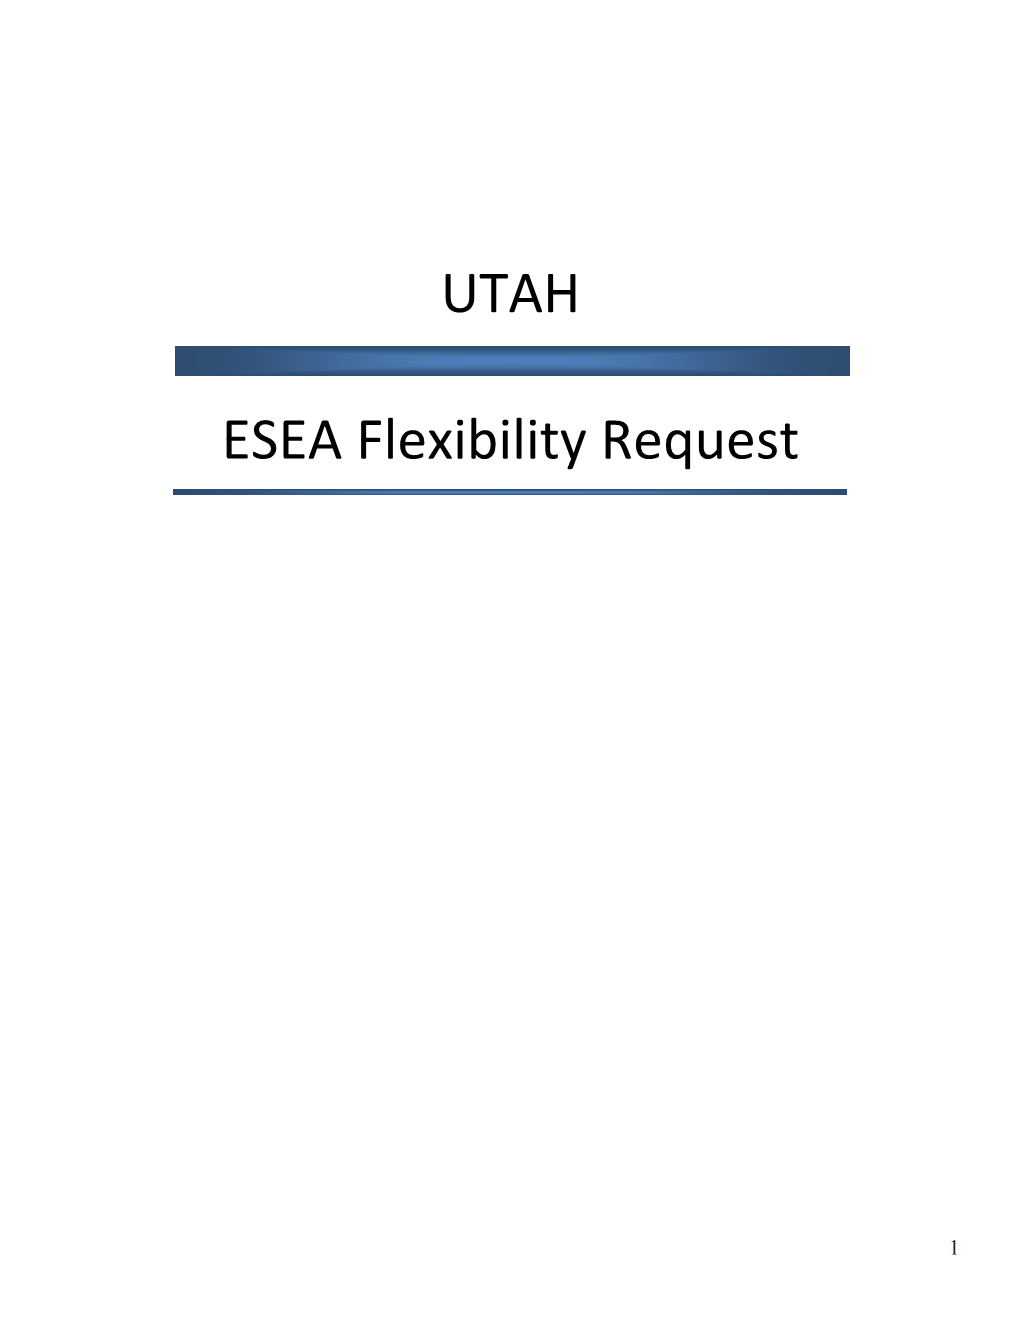 Utah: ESEA Flexibility Request